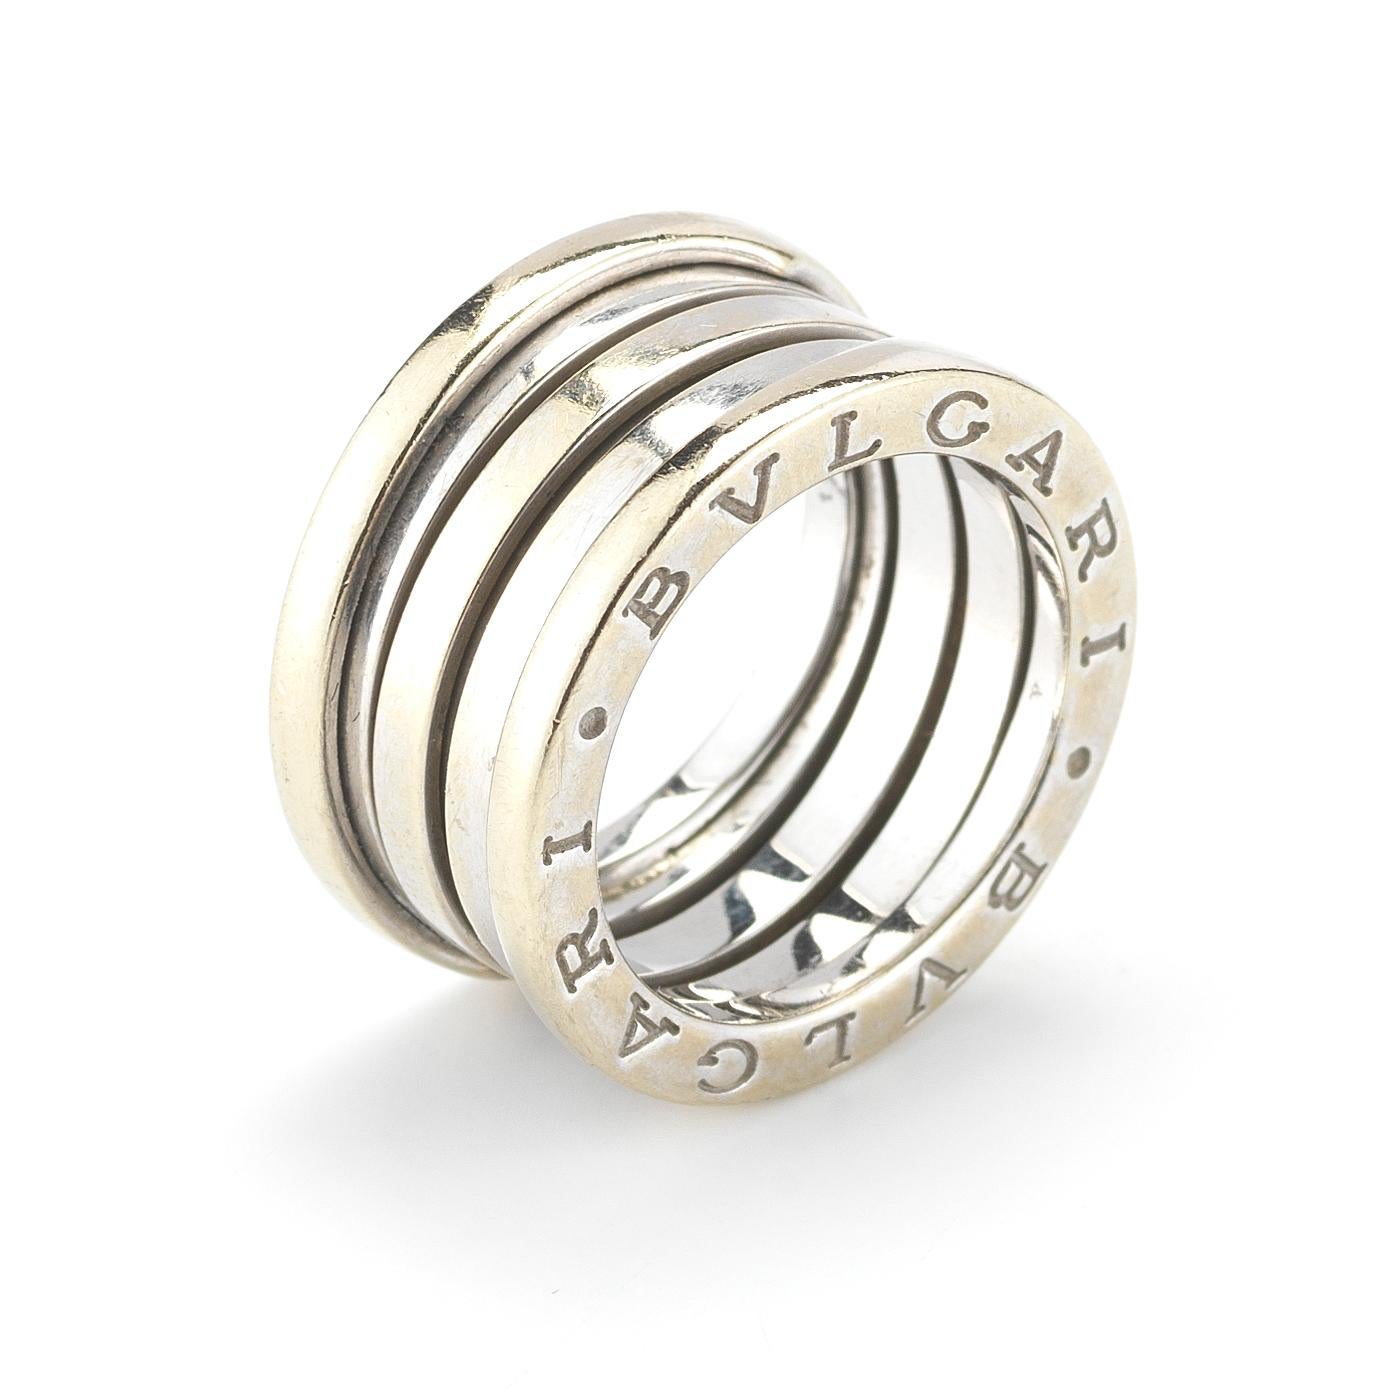 The Bulgari B.Zero1 four-band ring in 18 karat white gold draws inspiration from Rome's Colosseum. Size 5.5 (European 51).